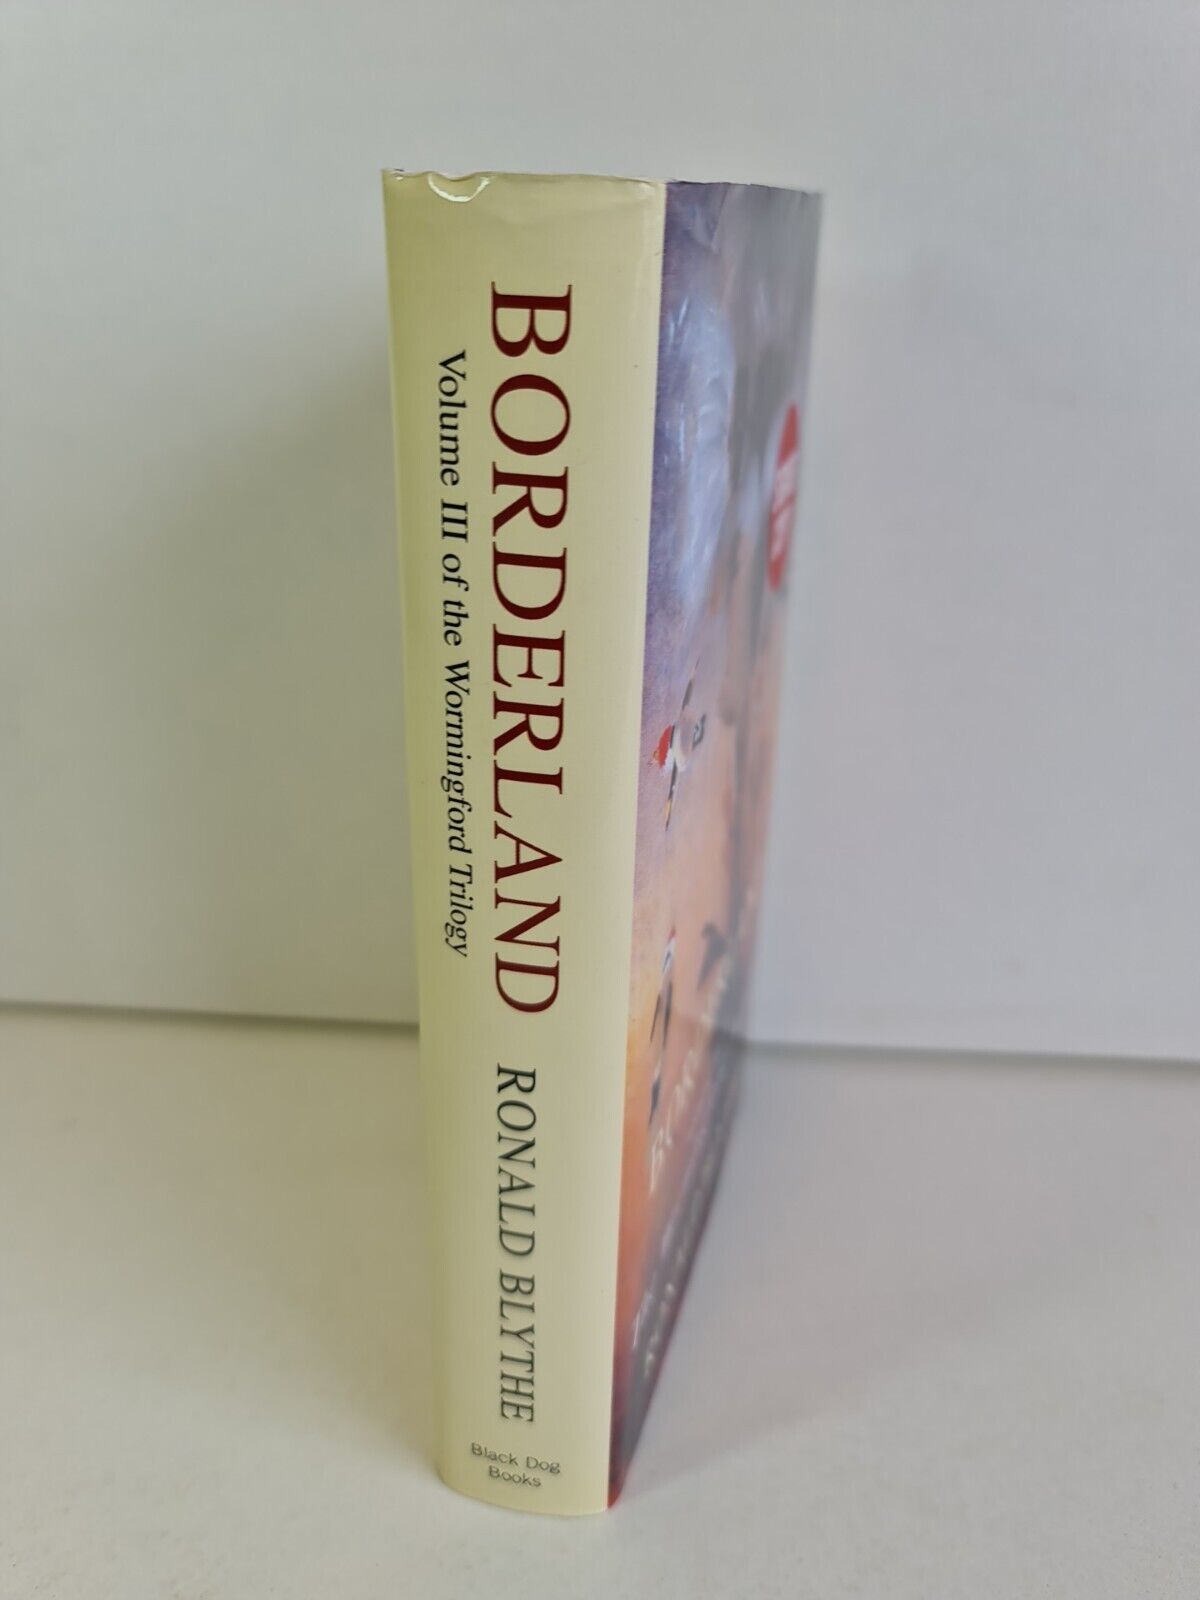 SIGNED Borderland: v.3 by Ronald Blythe (2005)